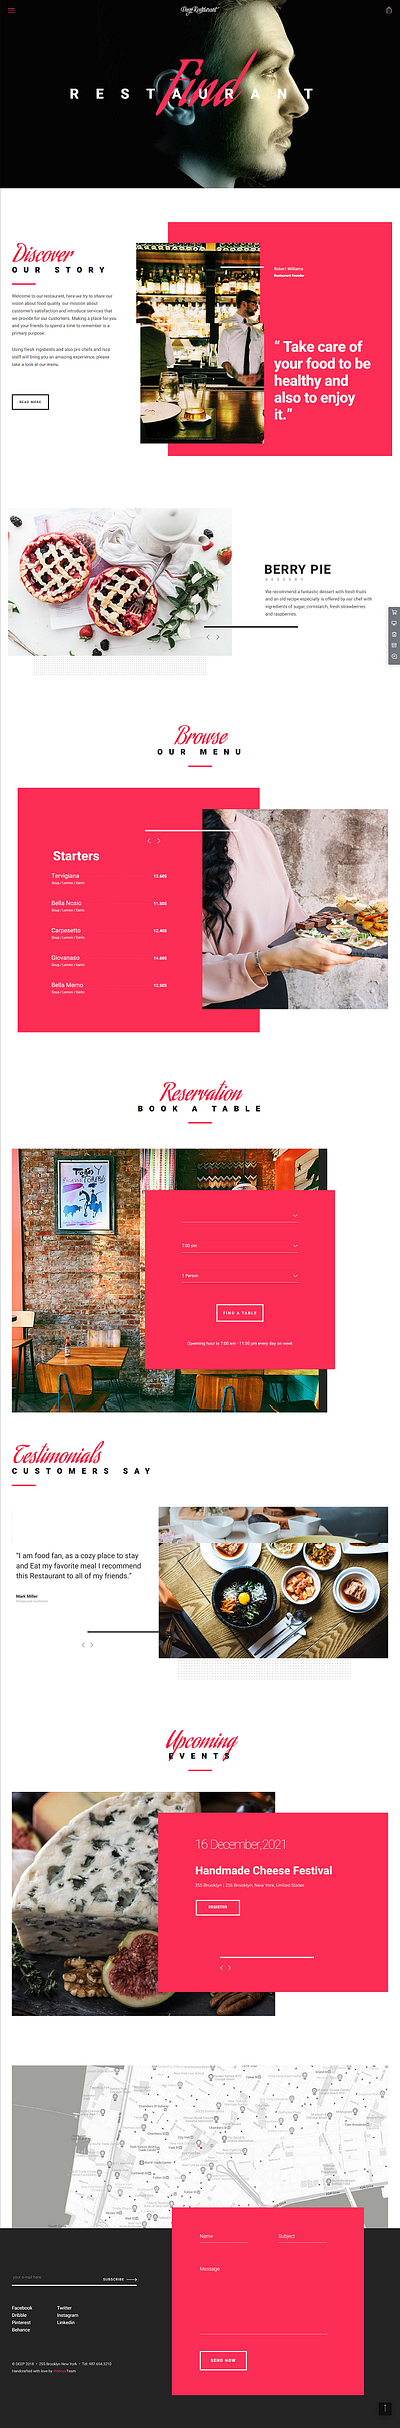 Restaurant Website restaurant website web design